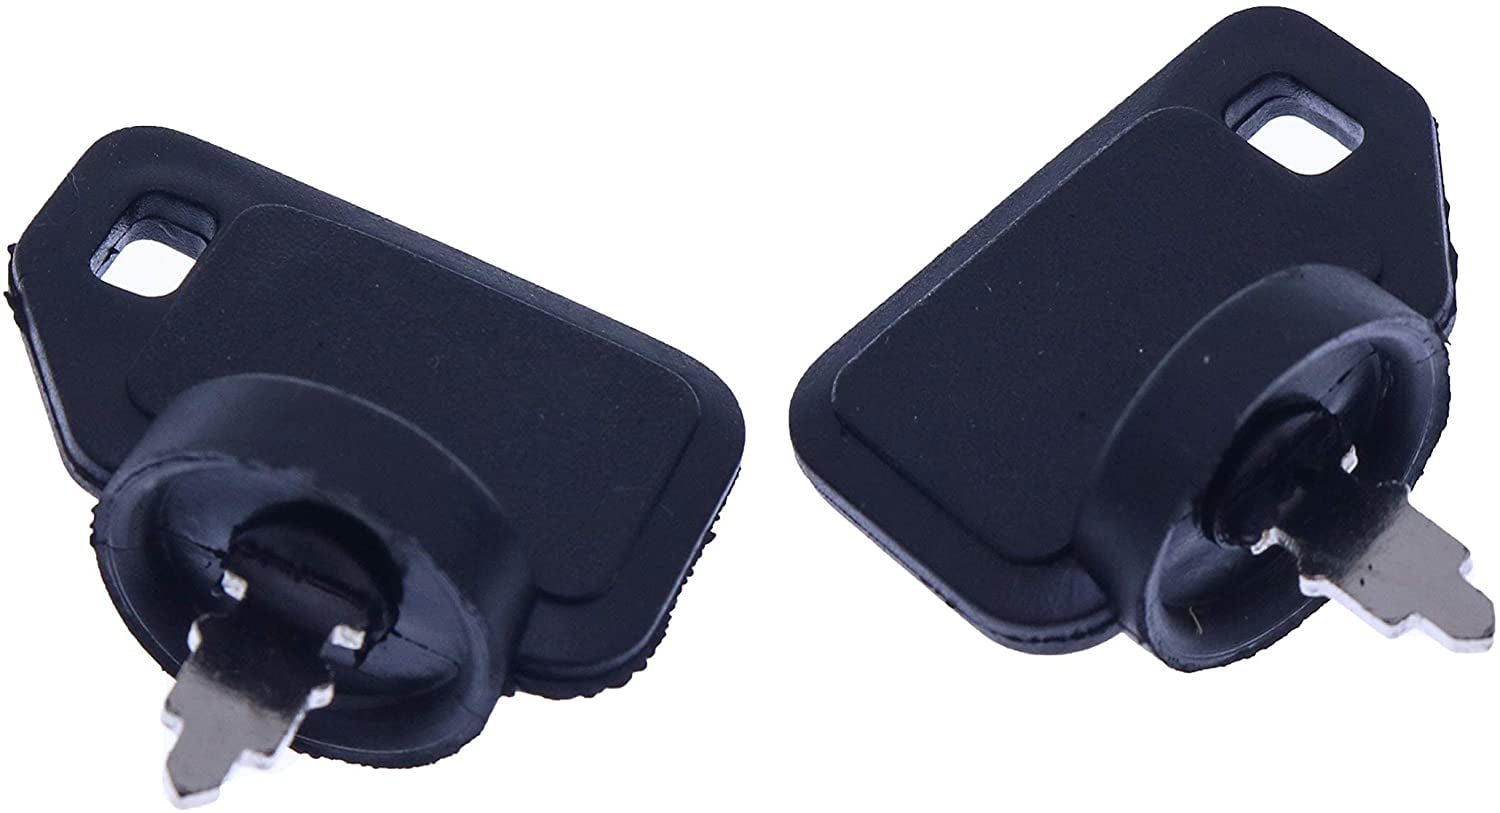 FREE Carabiner Keychain 2 Pack 1-603511 103-2106 62-7770 Titan Z-Master Lazer Z Turf Ranger Navigator Turf Tracer X-Series Metro HD Switch Ignition Switch Key Set replaces Toro Exmark 63-8360 